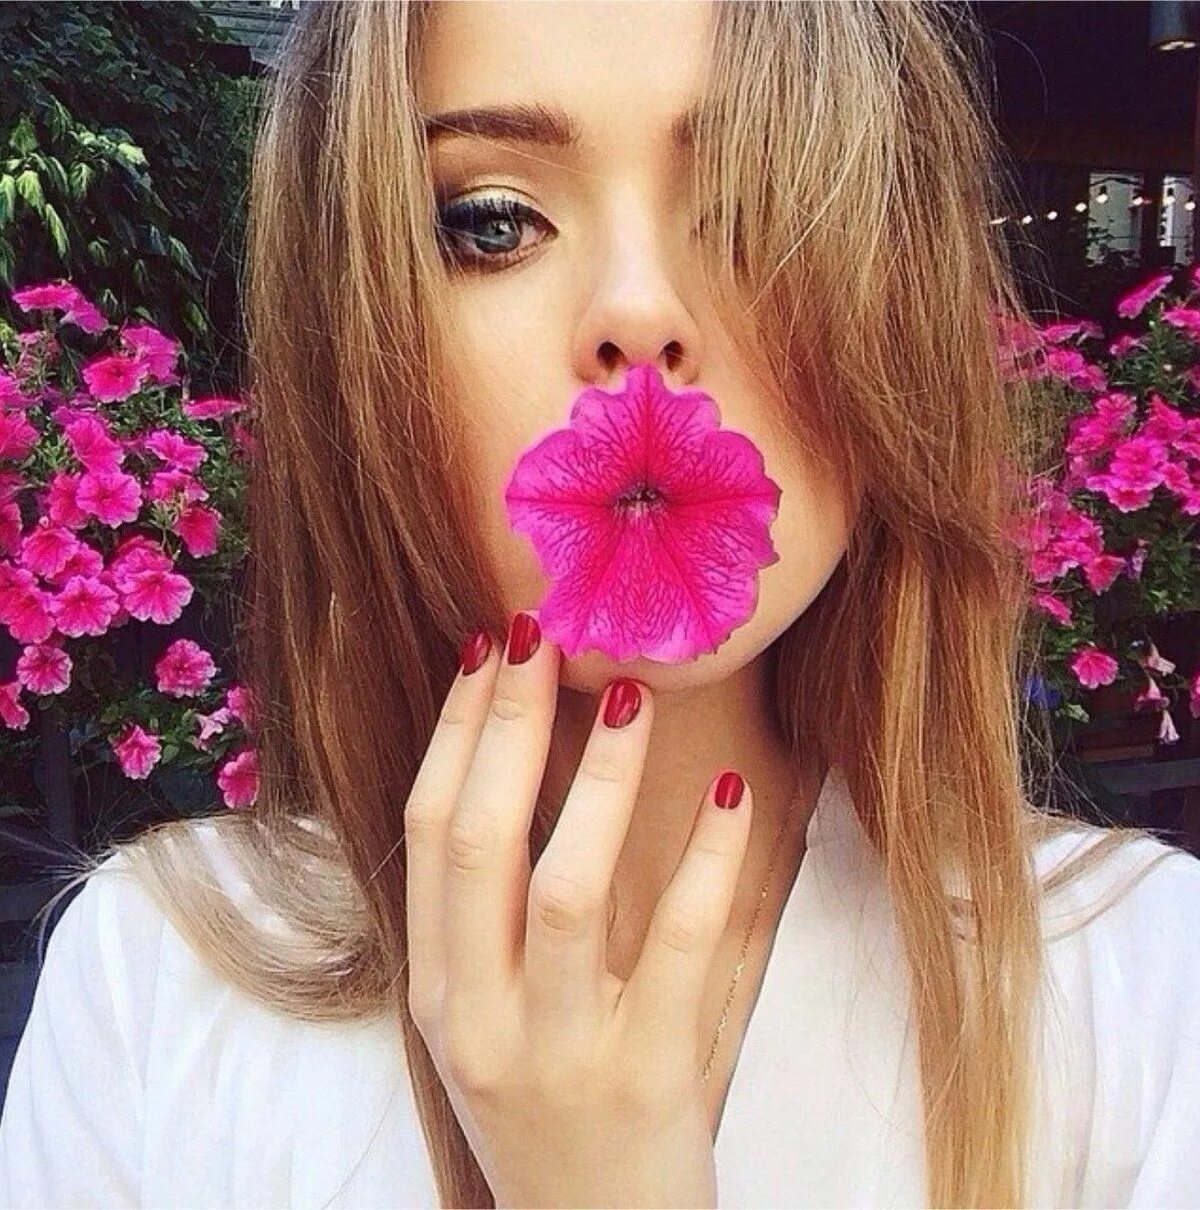 Красивые девушки инстаграмма. Красивое селфи с цветами.